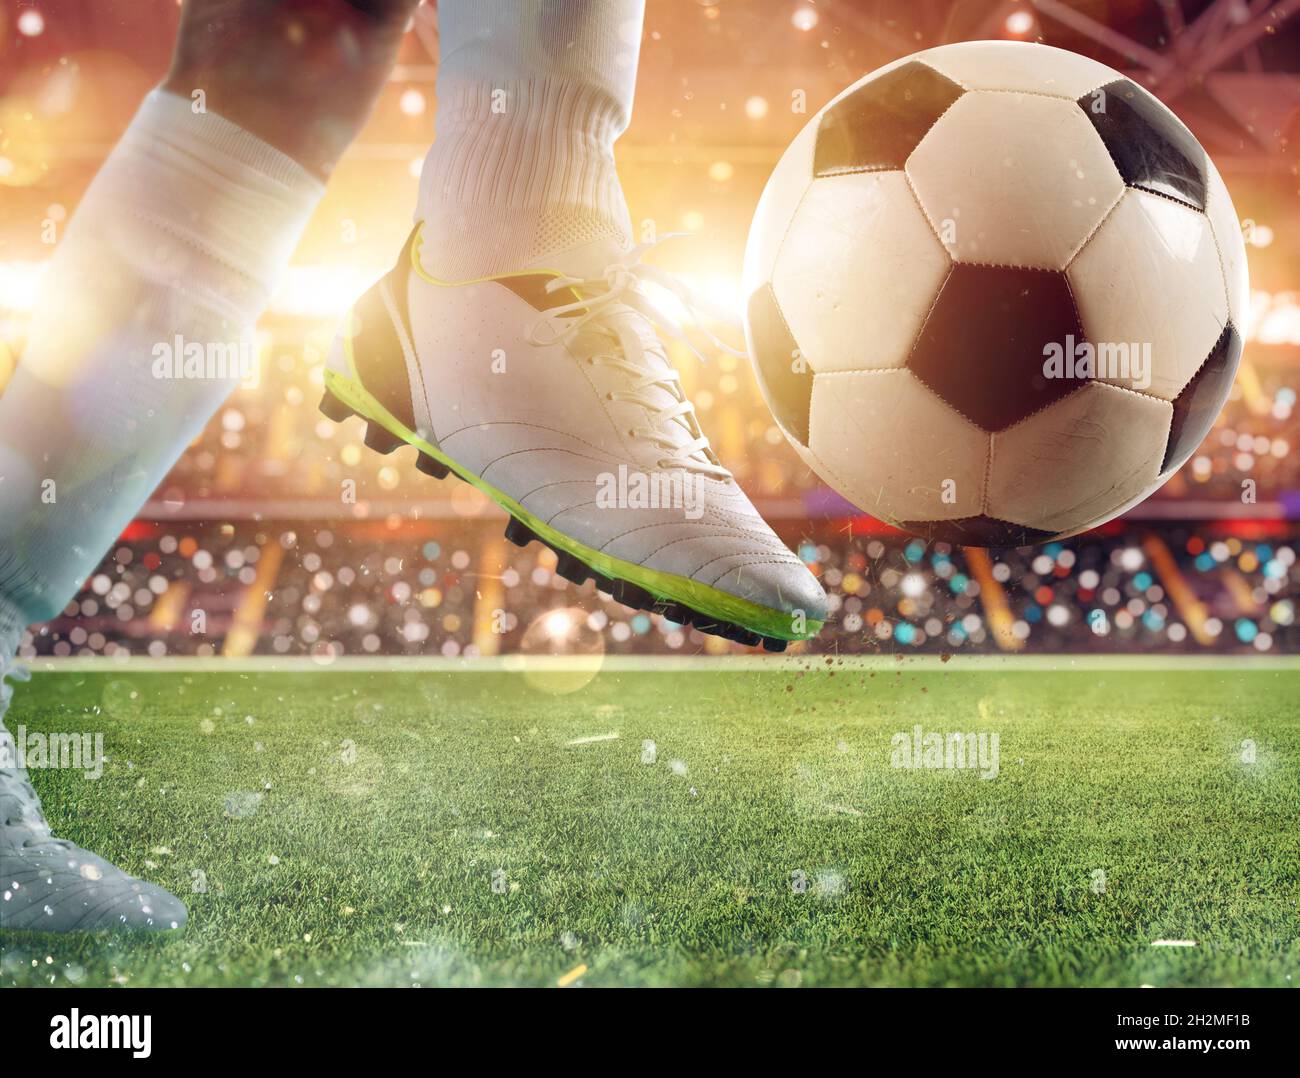 Soccer player ready to kicks the ball at the stadium Stock Photo